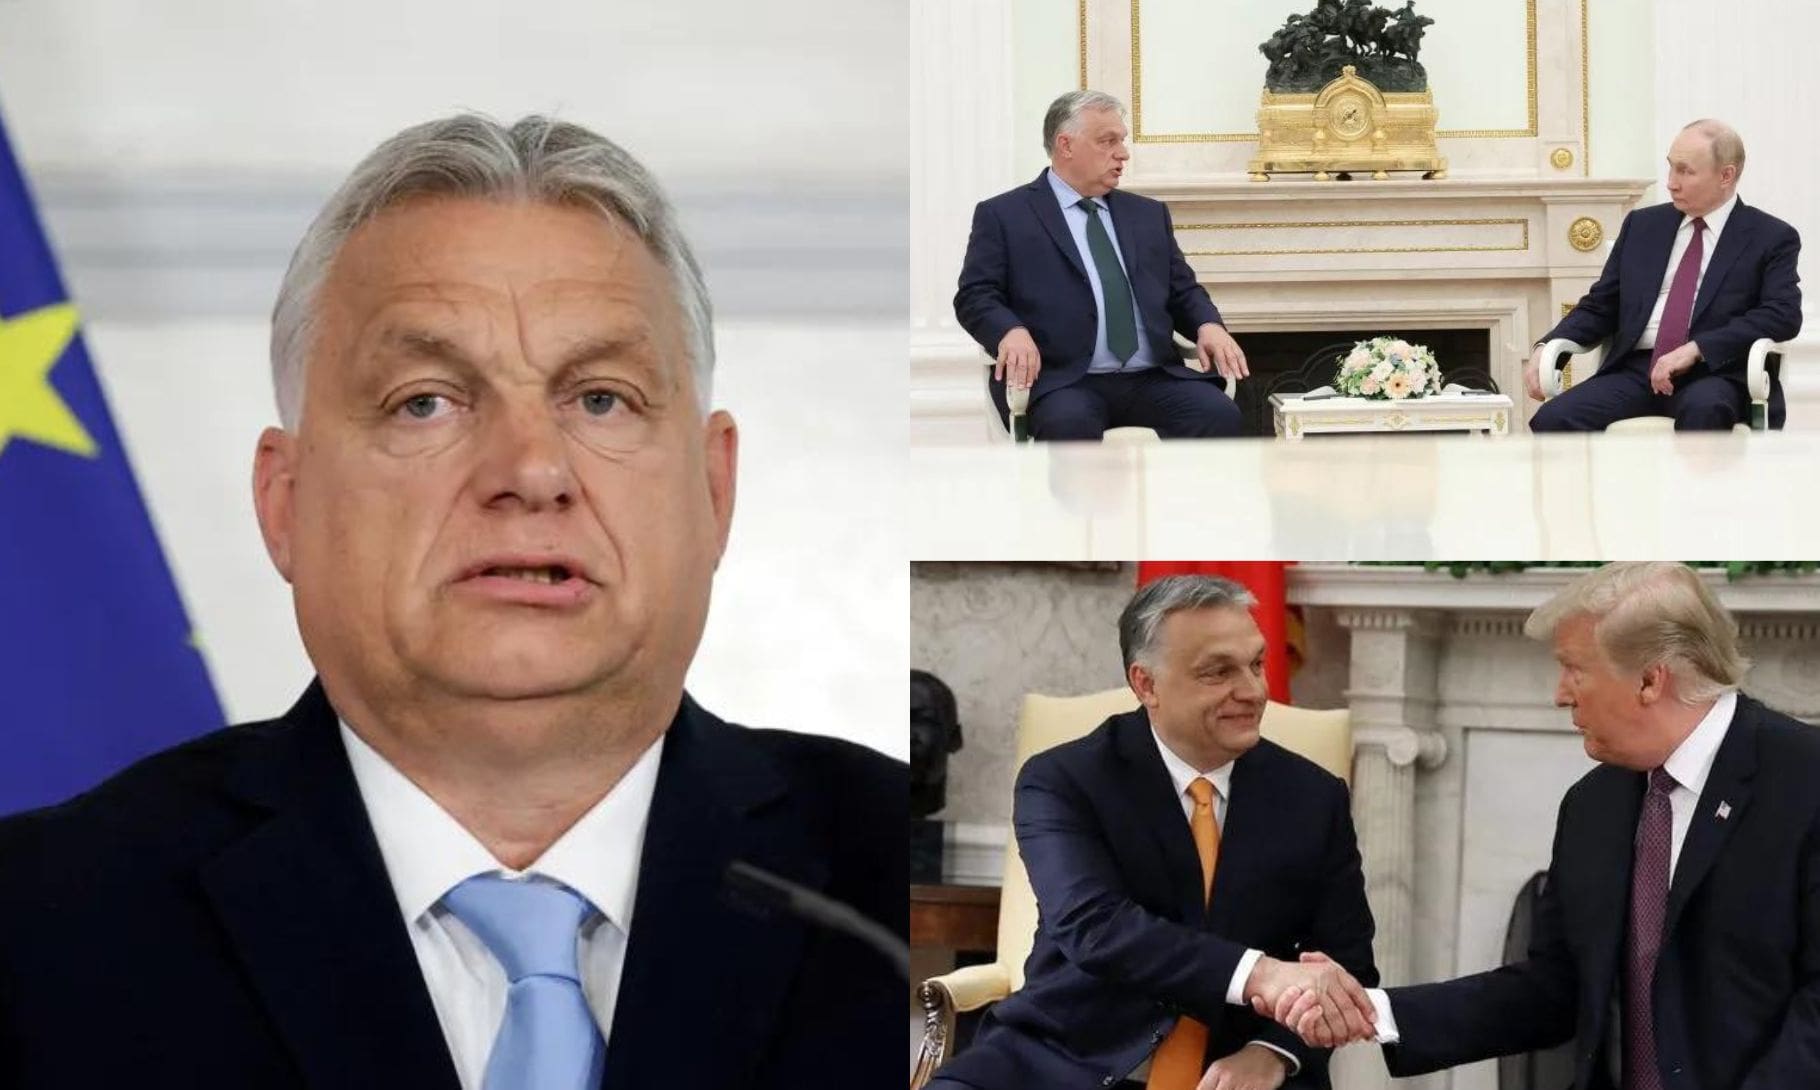 Viktor Orbán Supports Donald Trump, Criticizes US Policies On Ukraine